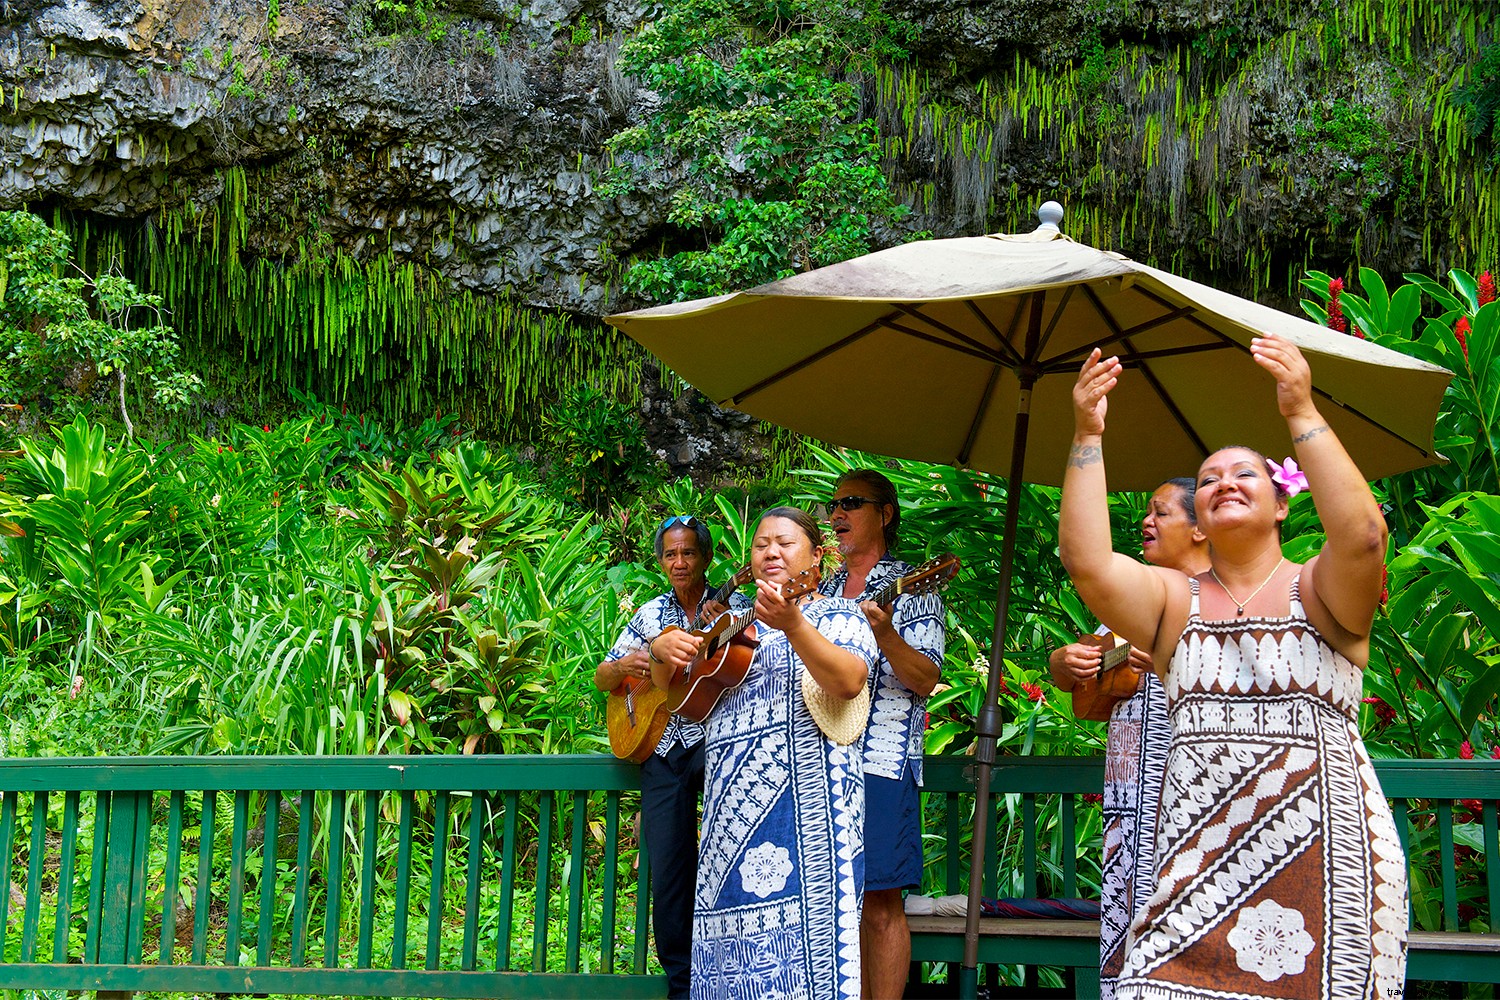 Il modo giusto per visitare Kauai:tenerti al sicuro, Mantenere Kauai al sicuro 